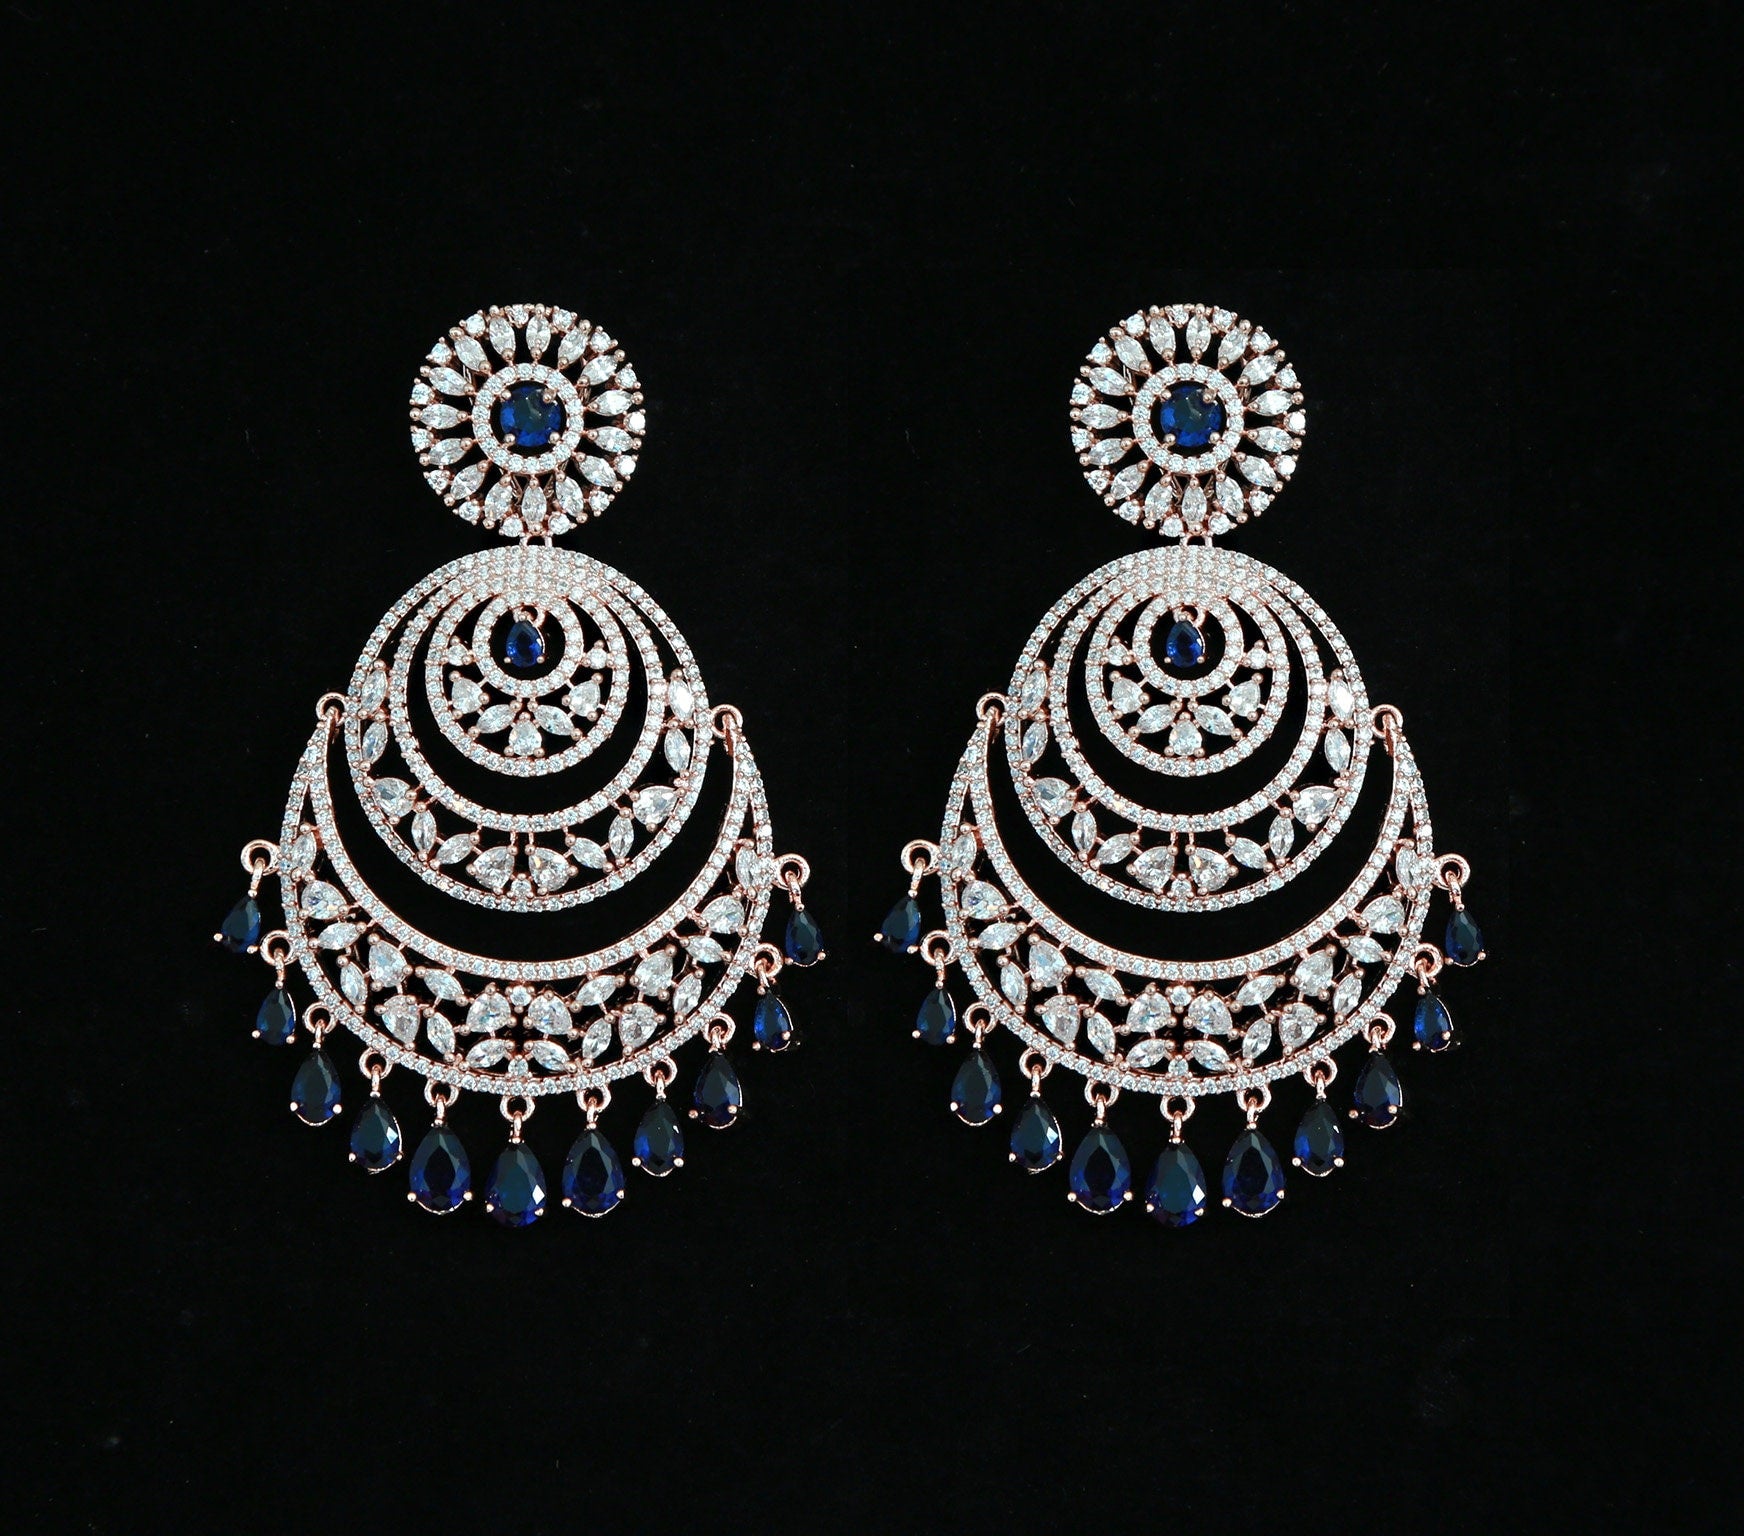 Rose Gold American Diamond Chandbali Earrings Mang tikka set| Indian Bollywood style CZ Earrings Maang Tikka Combo Set| Wedding Gift for her